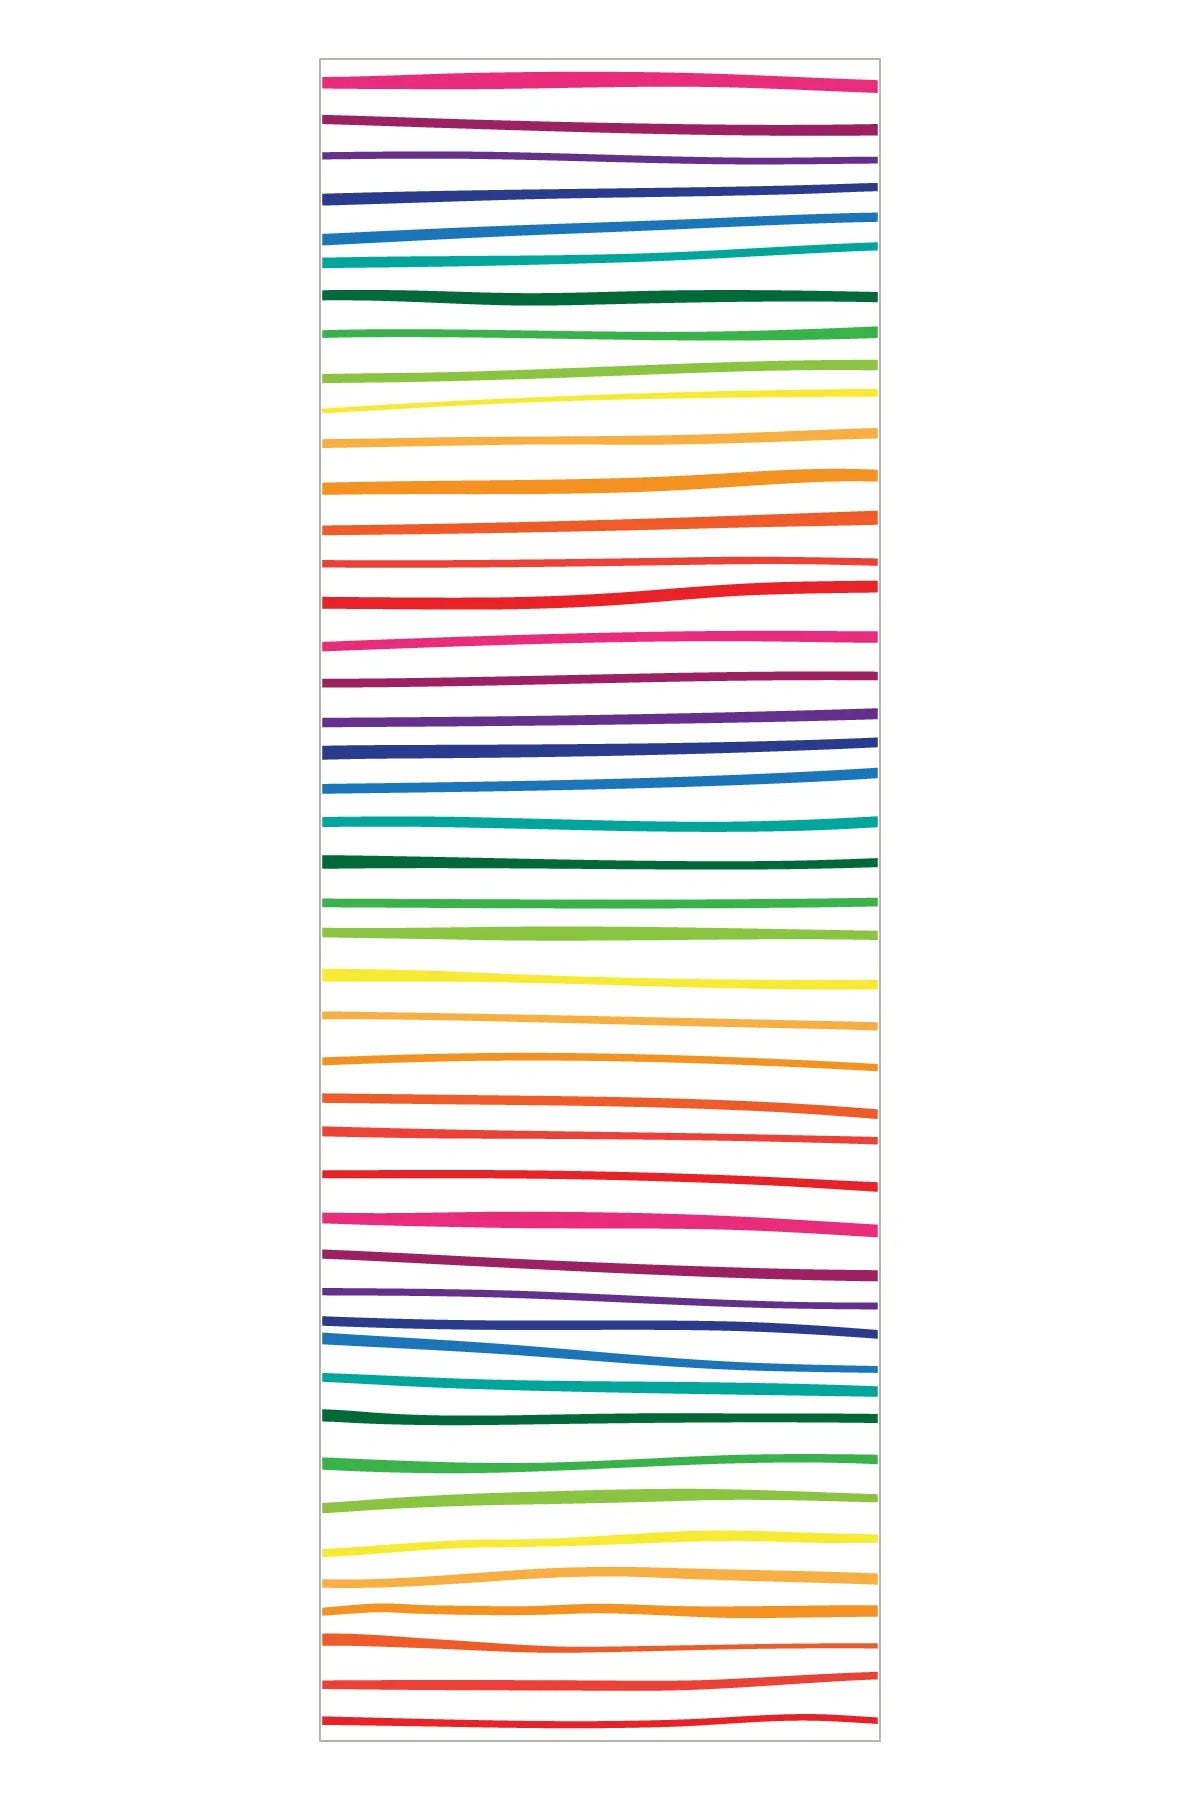 Washi Tapes Rainbow Stripes Wide Washi Tape